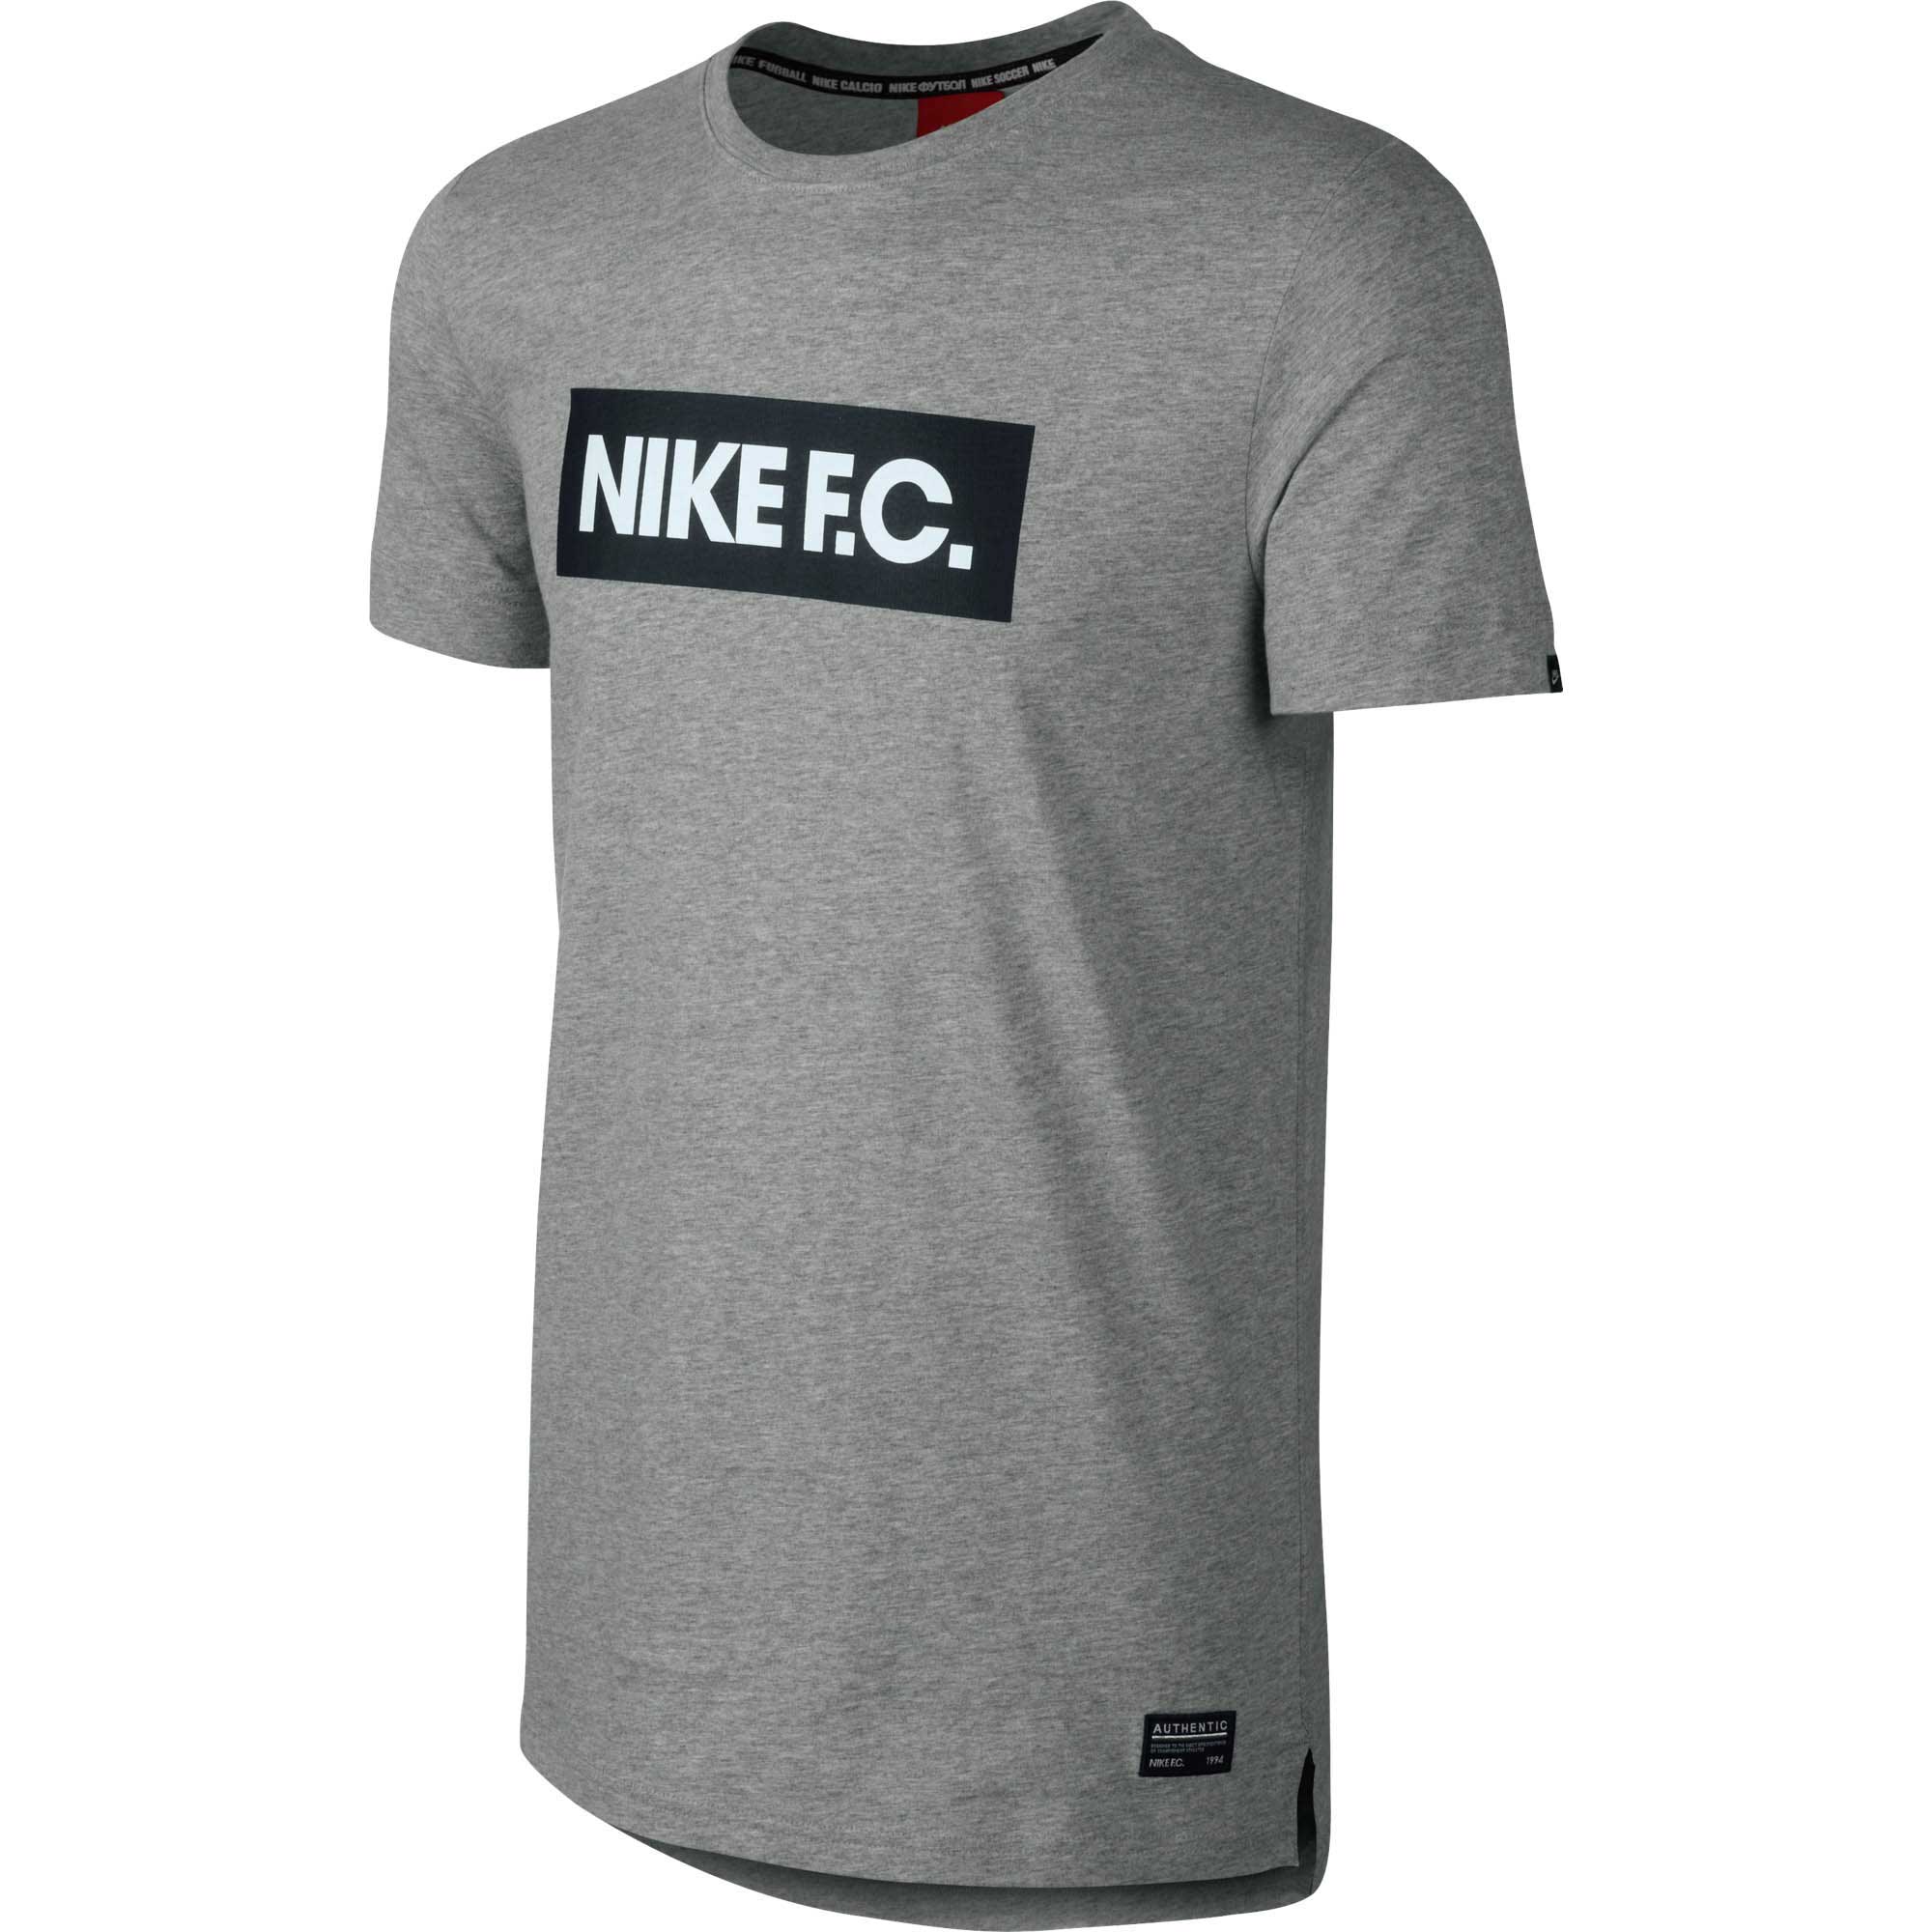 Nike FC Glory T-Shirt - Grey Nike Soccer Tees